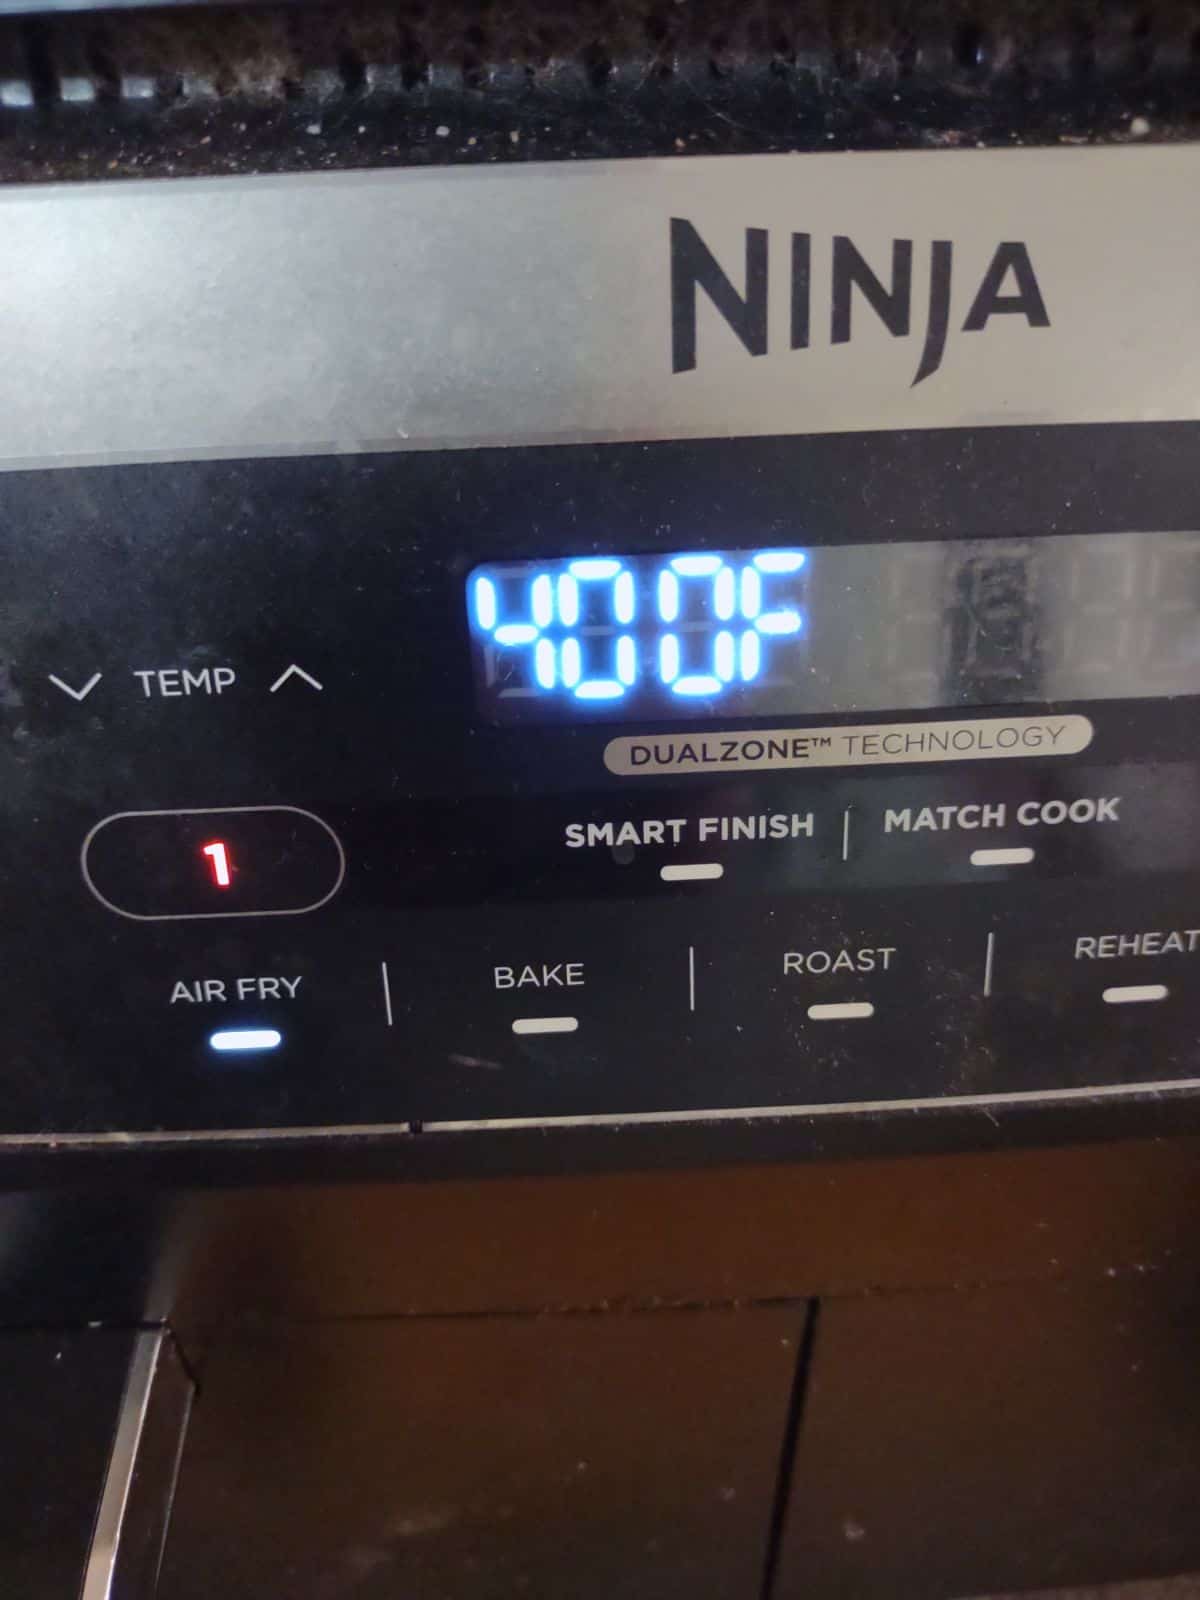 Ninja Foodi air fryer set to 400 degrees.